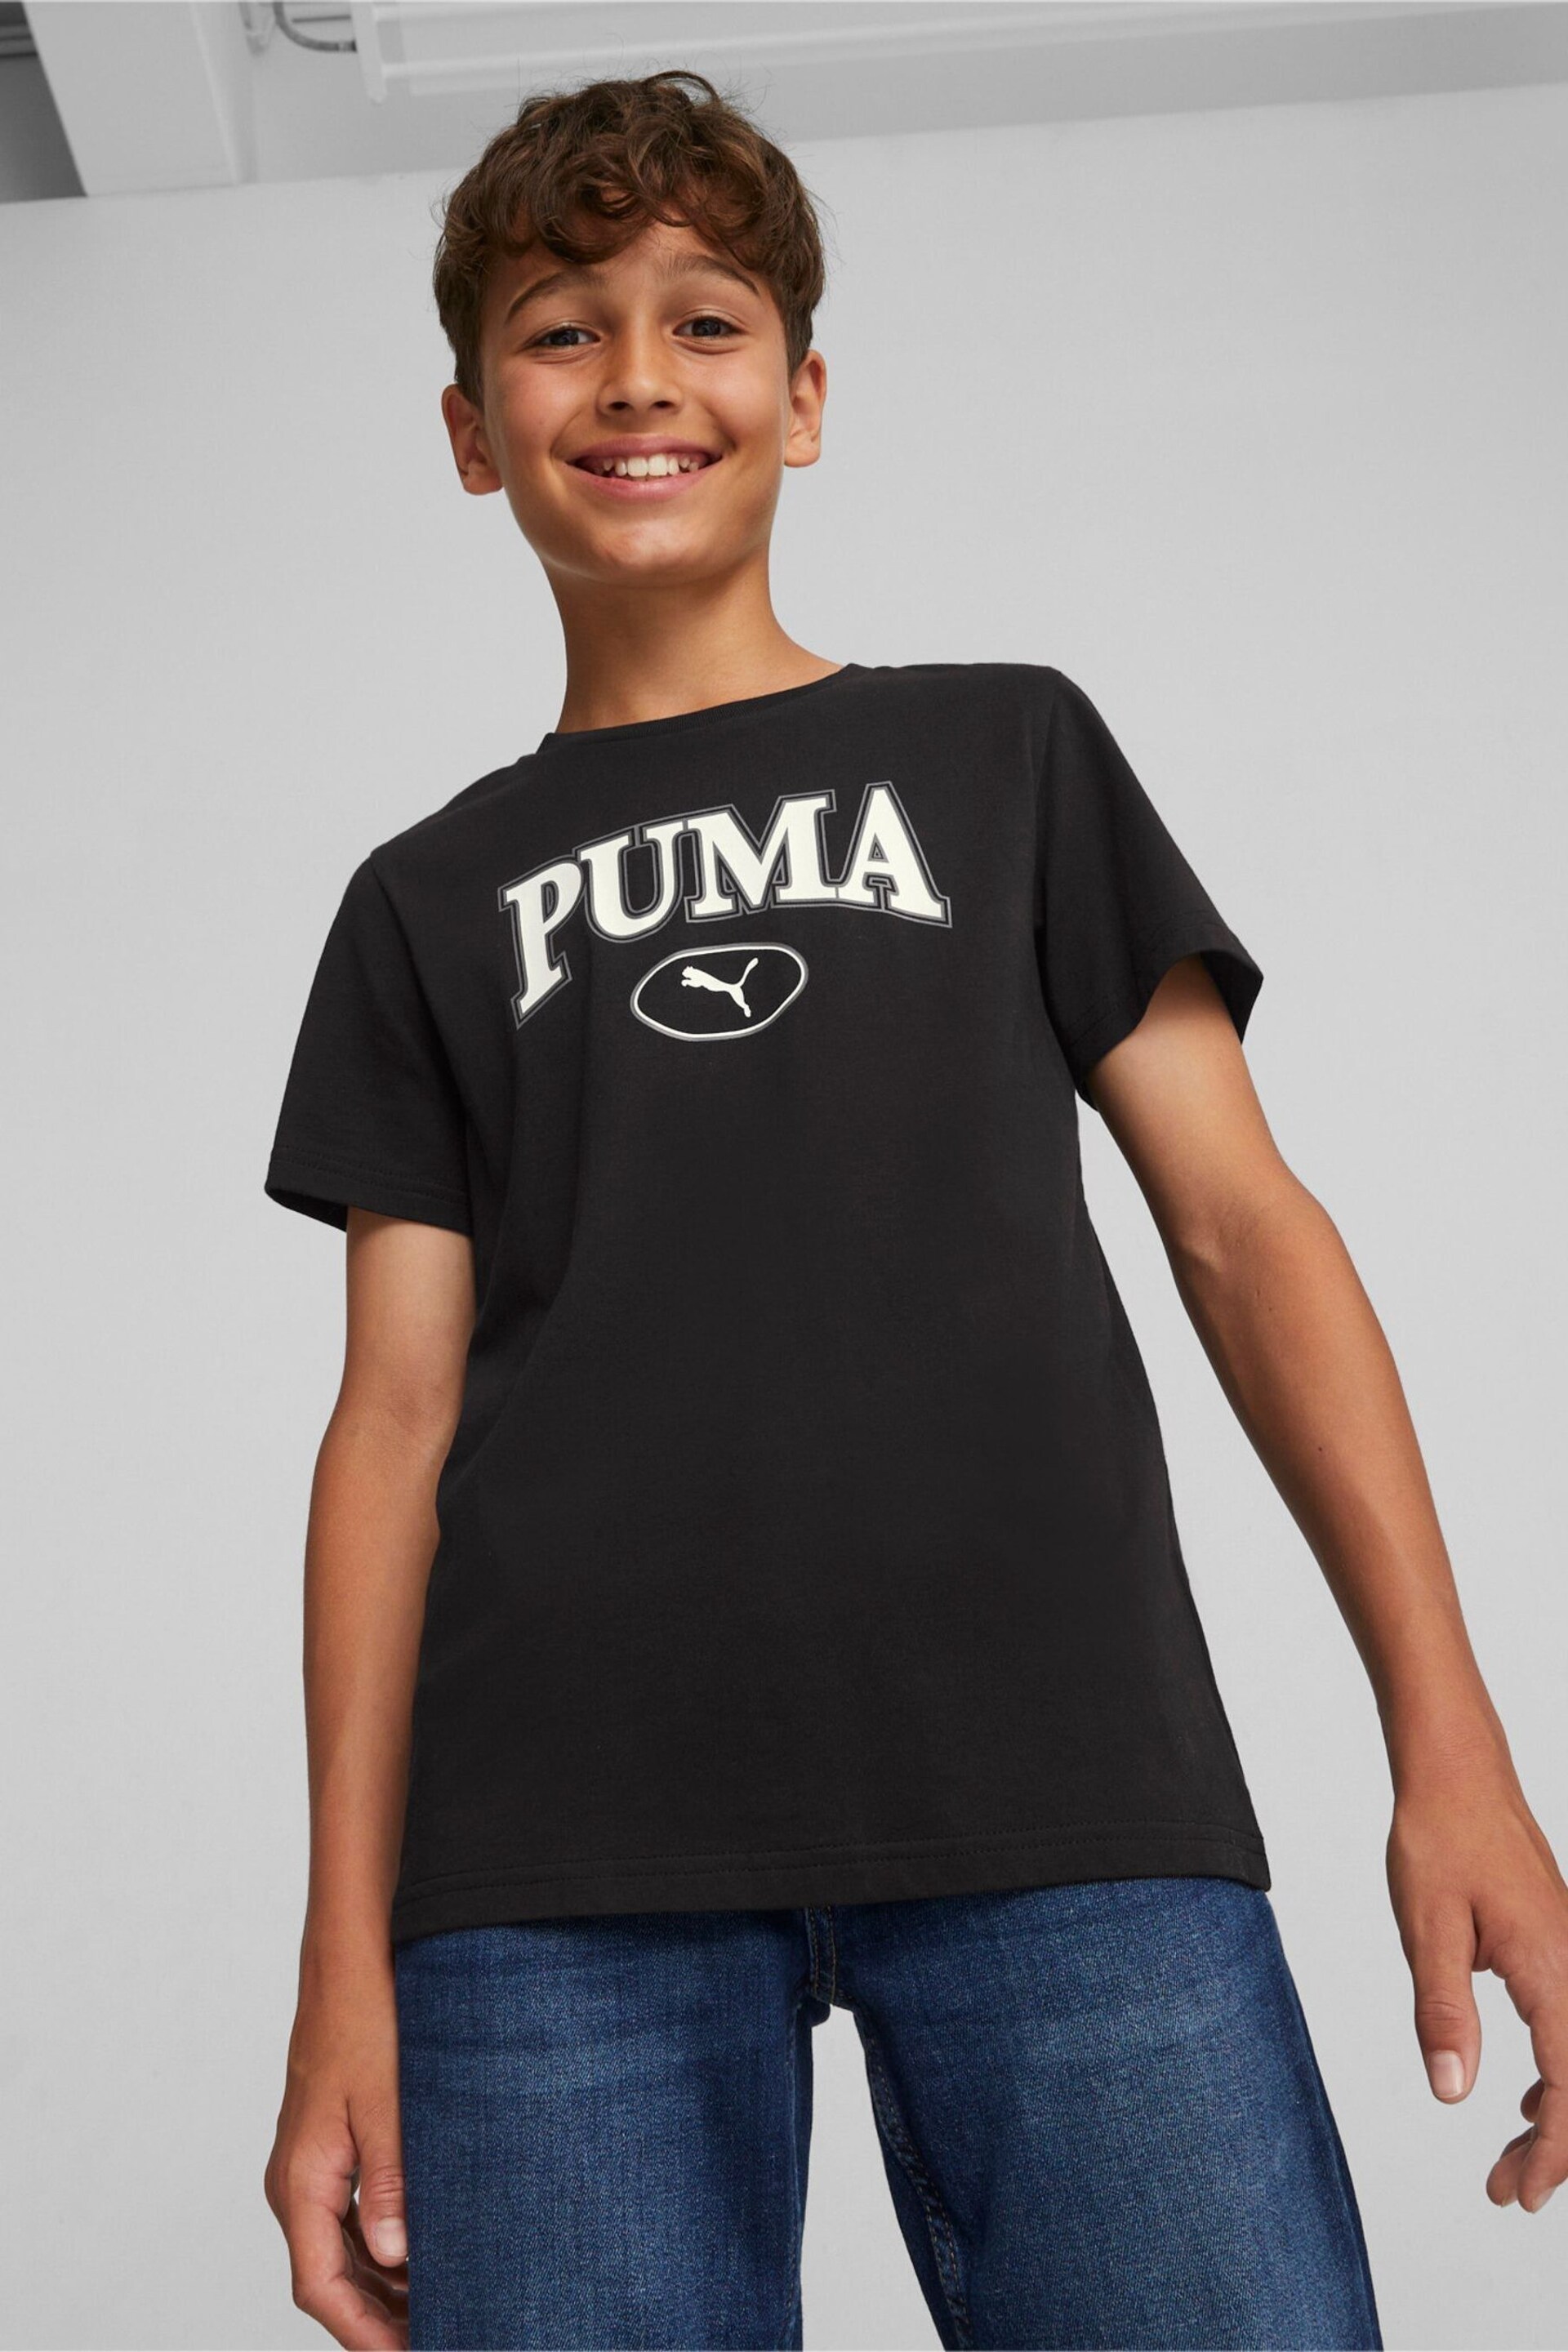 Puma Black Youth T-Shirt - Image 1 of 5